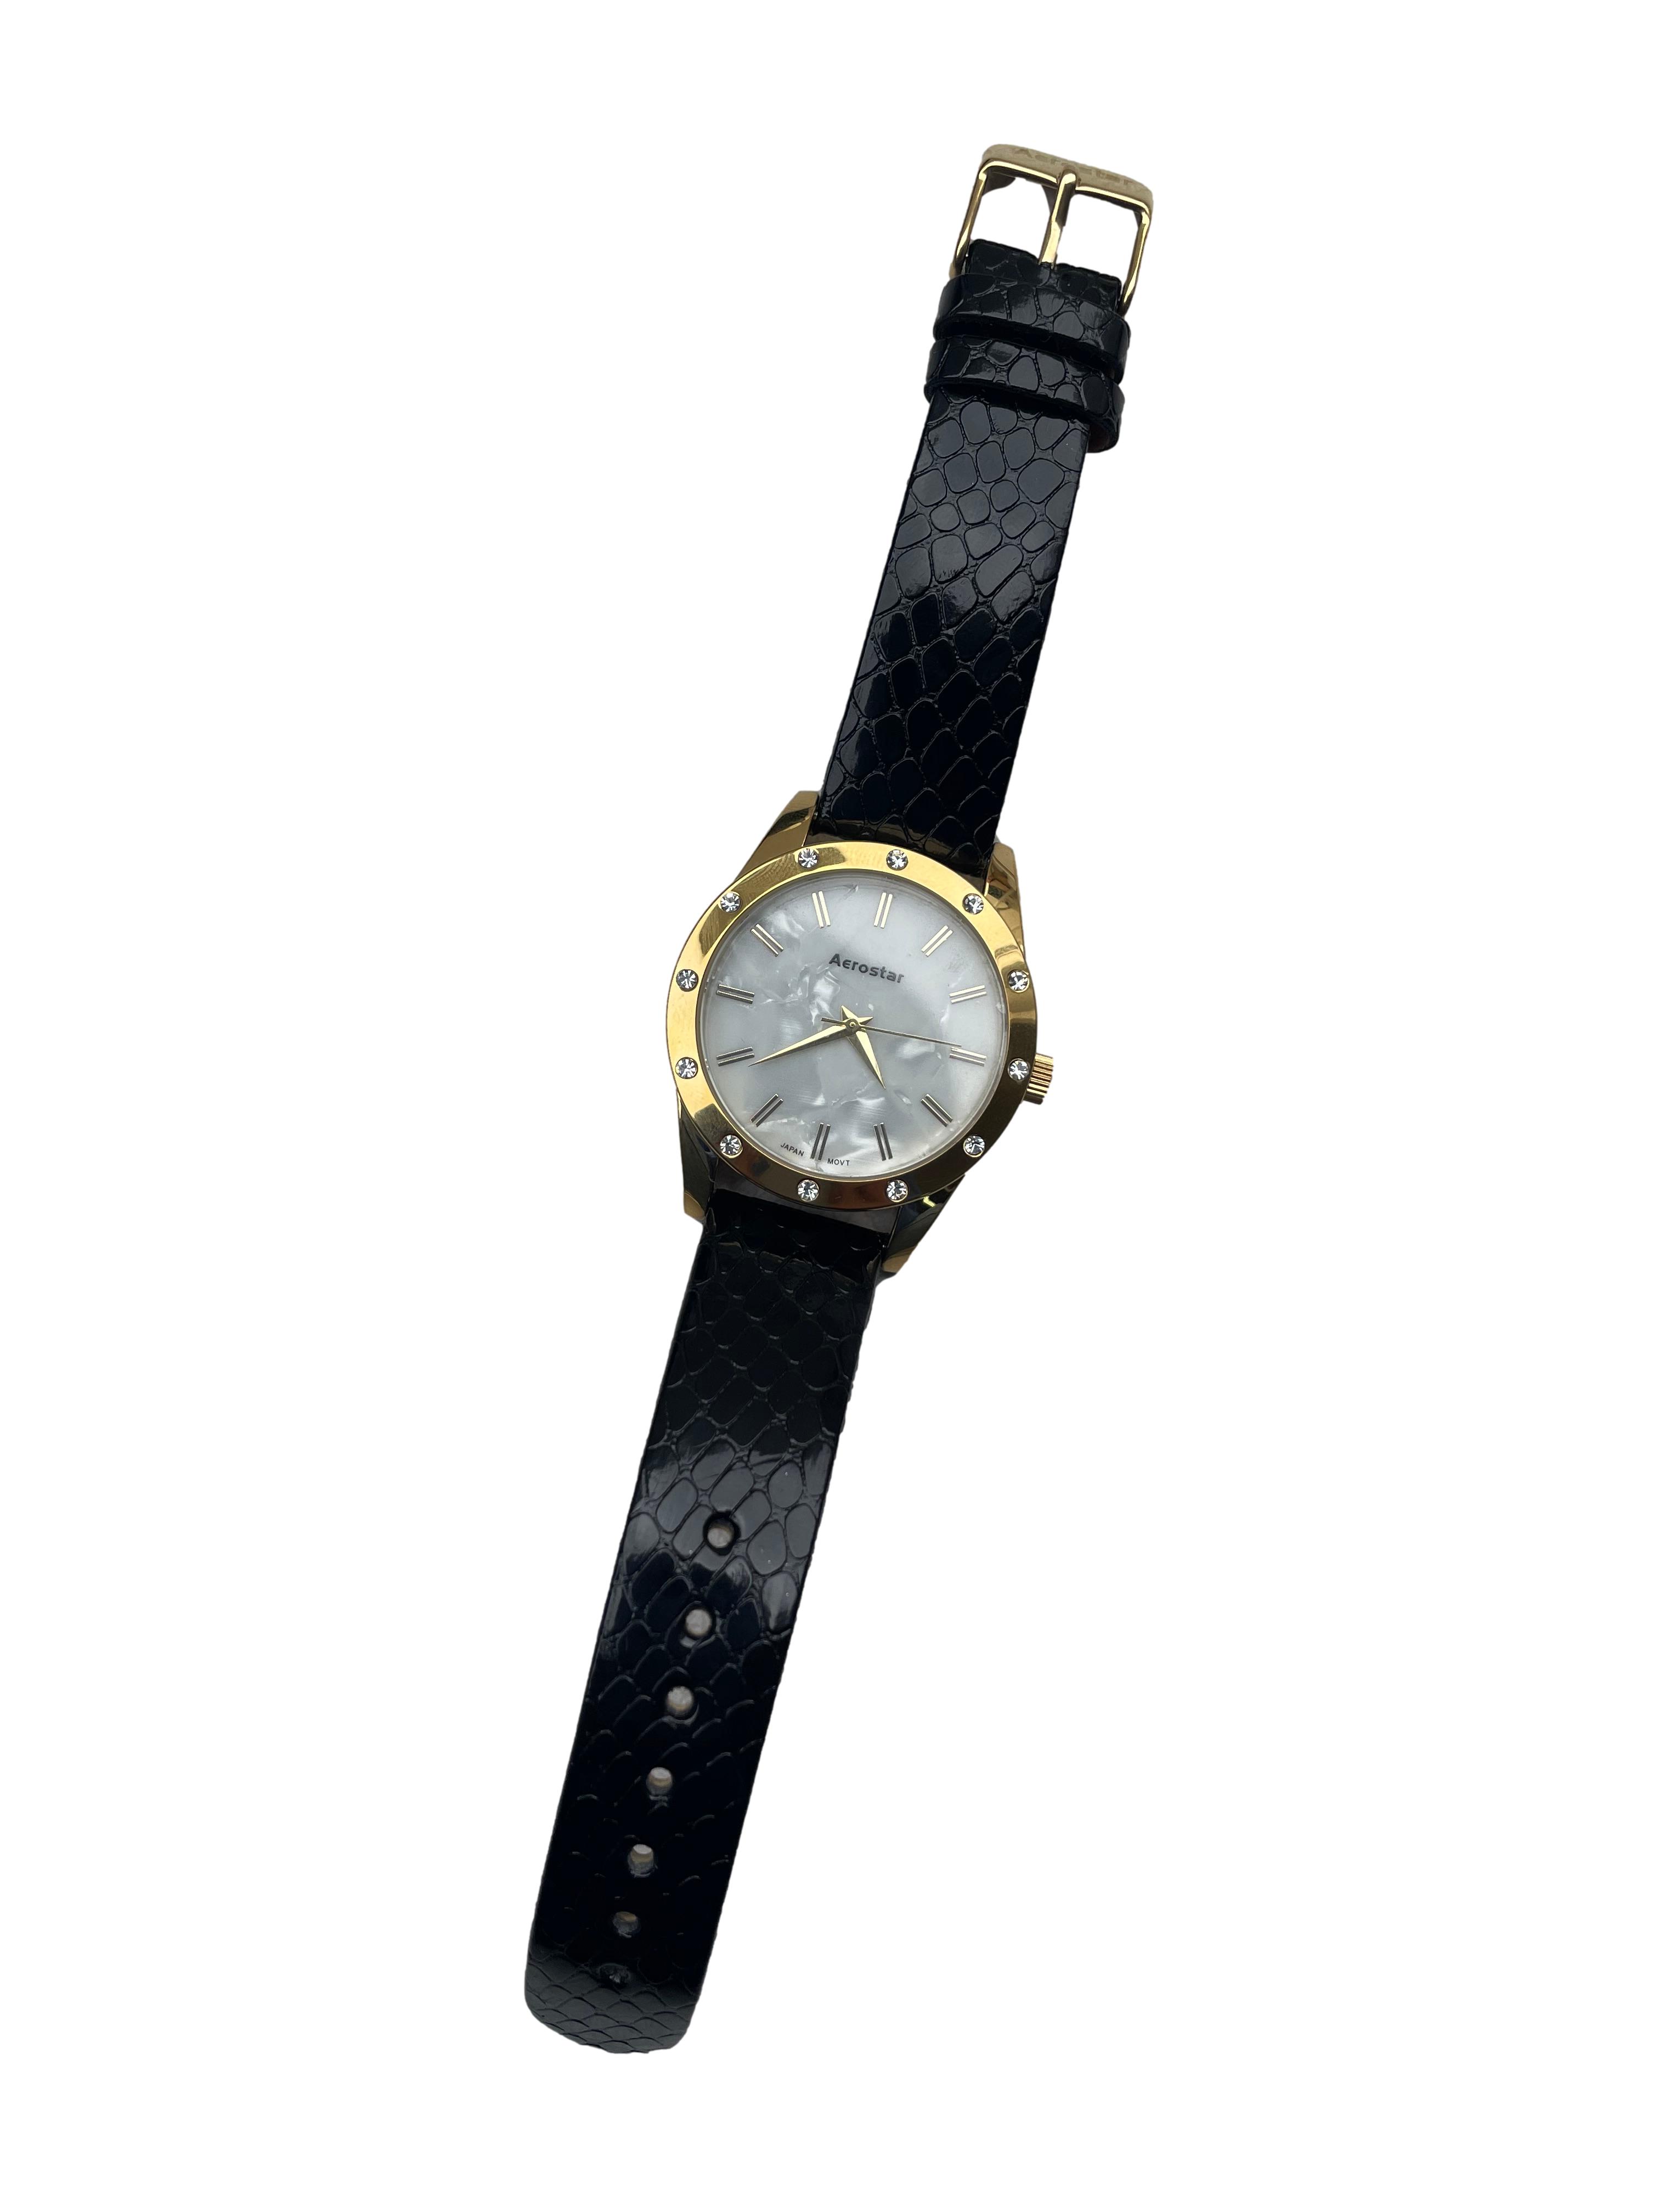 Reloj Aerostar modelo 63121, dorado con centro nacarado y aplicaciones brillantes, correa negra. Diámetro de reloj 3.5cm.